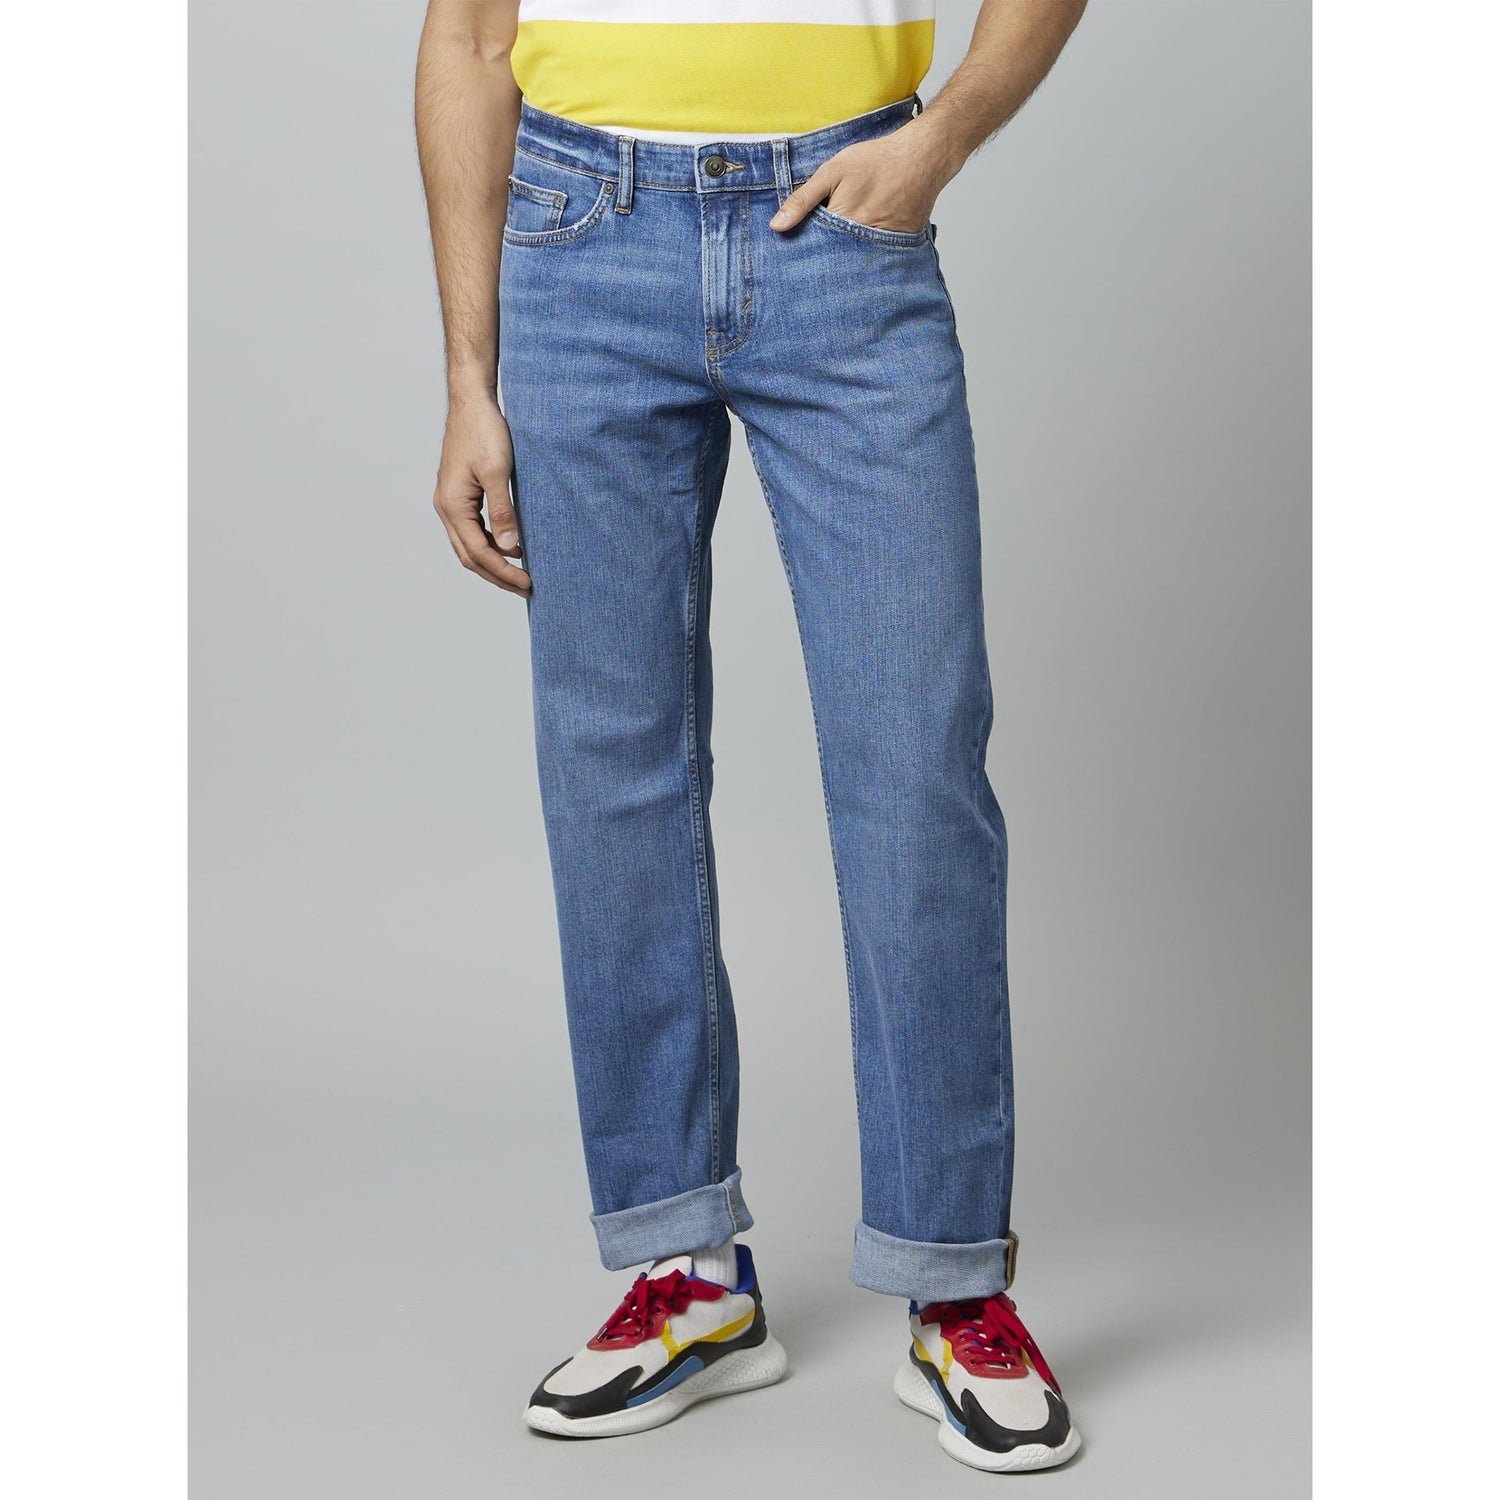 Blue Regular Fit Light Fade Stretchable Cotton Jeans (DOREG5)